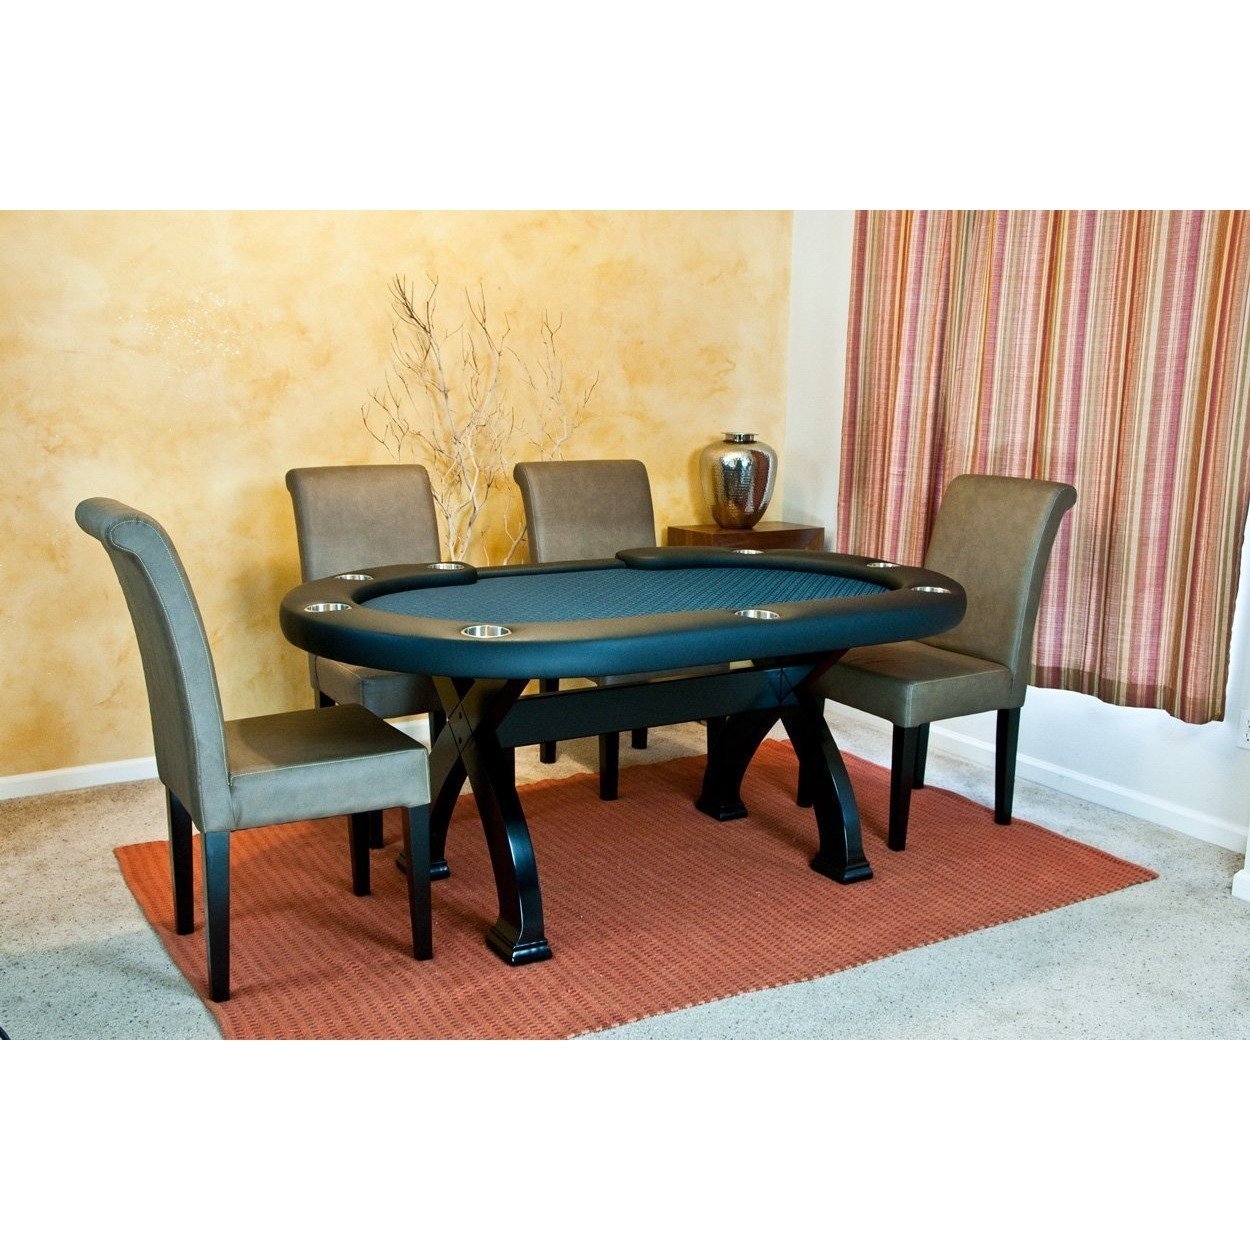 BBO Poker Tables Premium Lounge Poker Chair Set